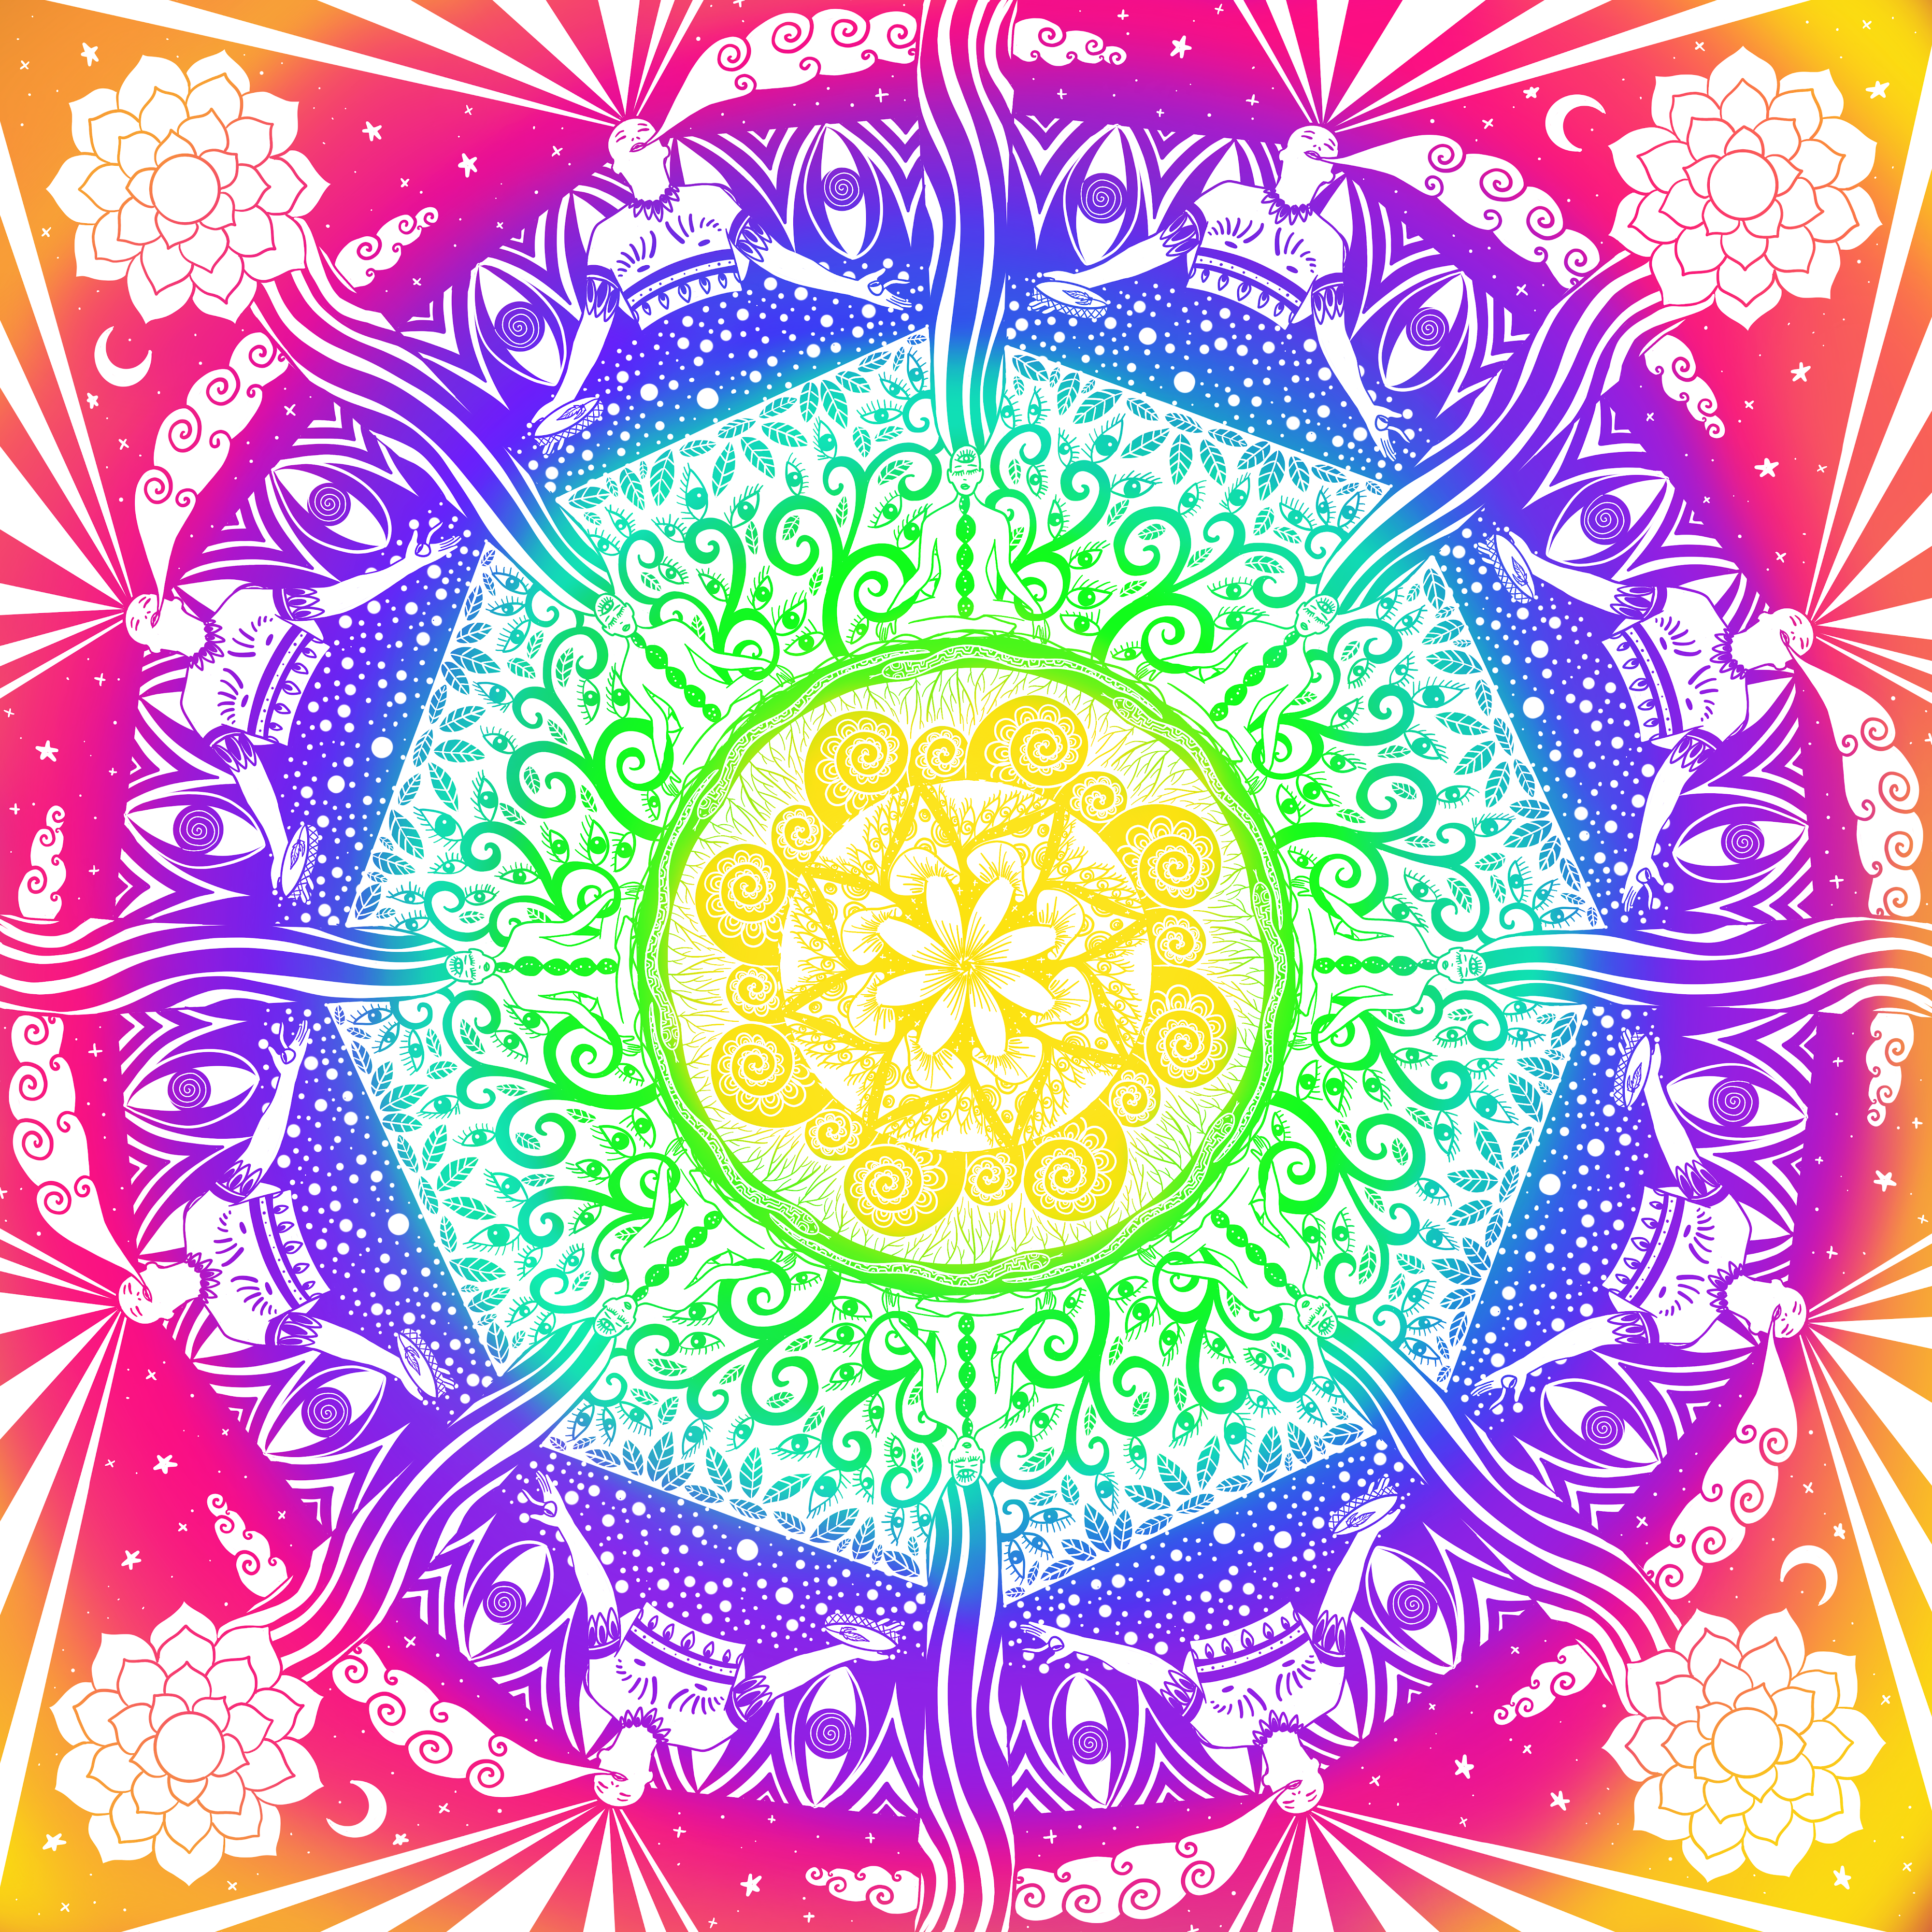 Mandala the psychedelic trip